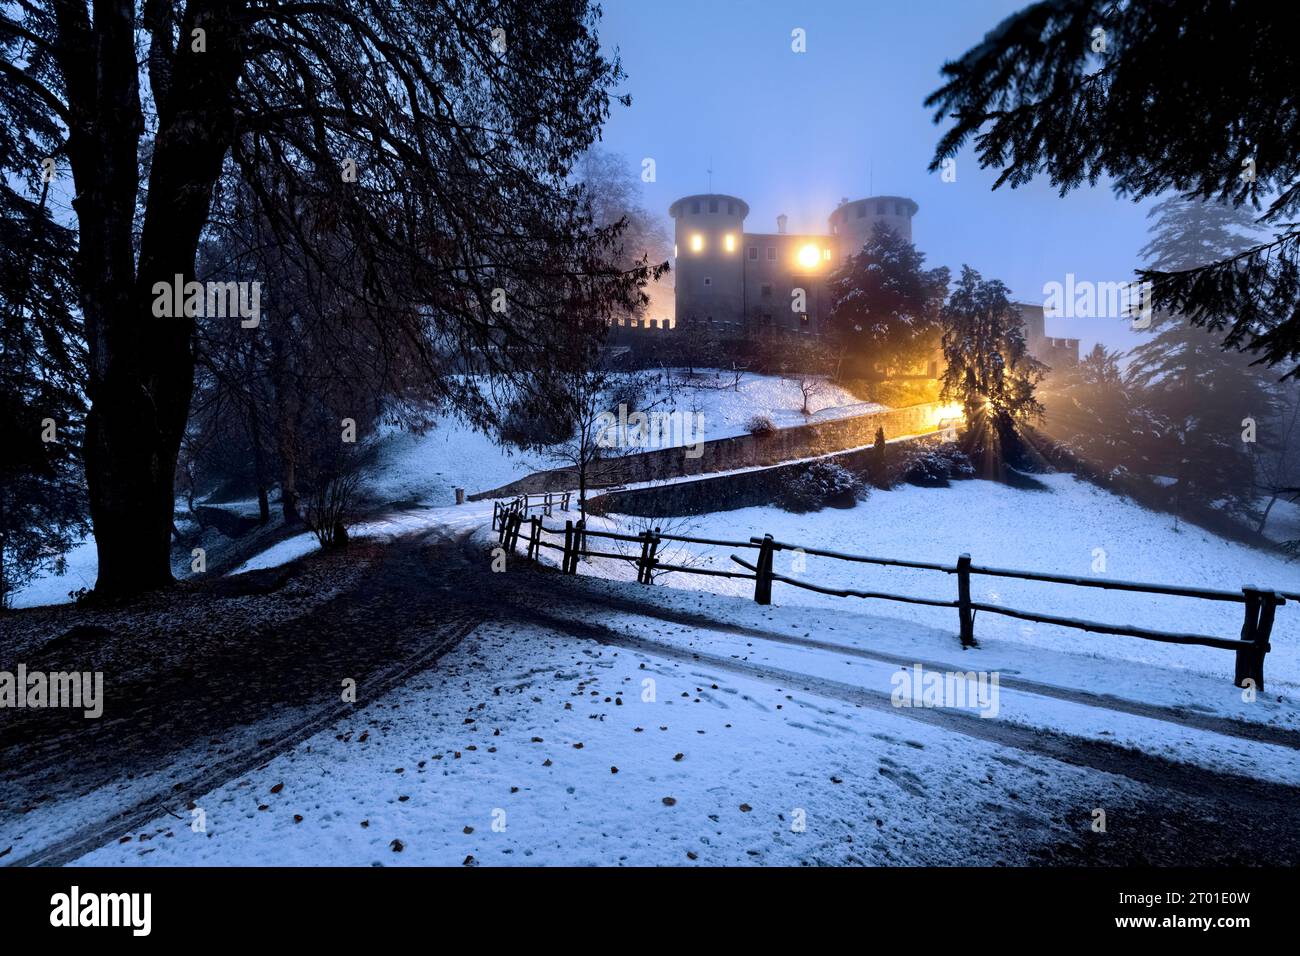 The Campo castle on a fairytale winter evening. Campo Lomaso, Giudicarie, Trentino, Italy. Stock Photo